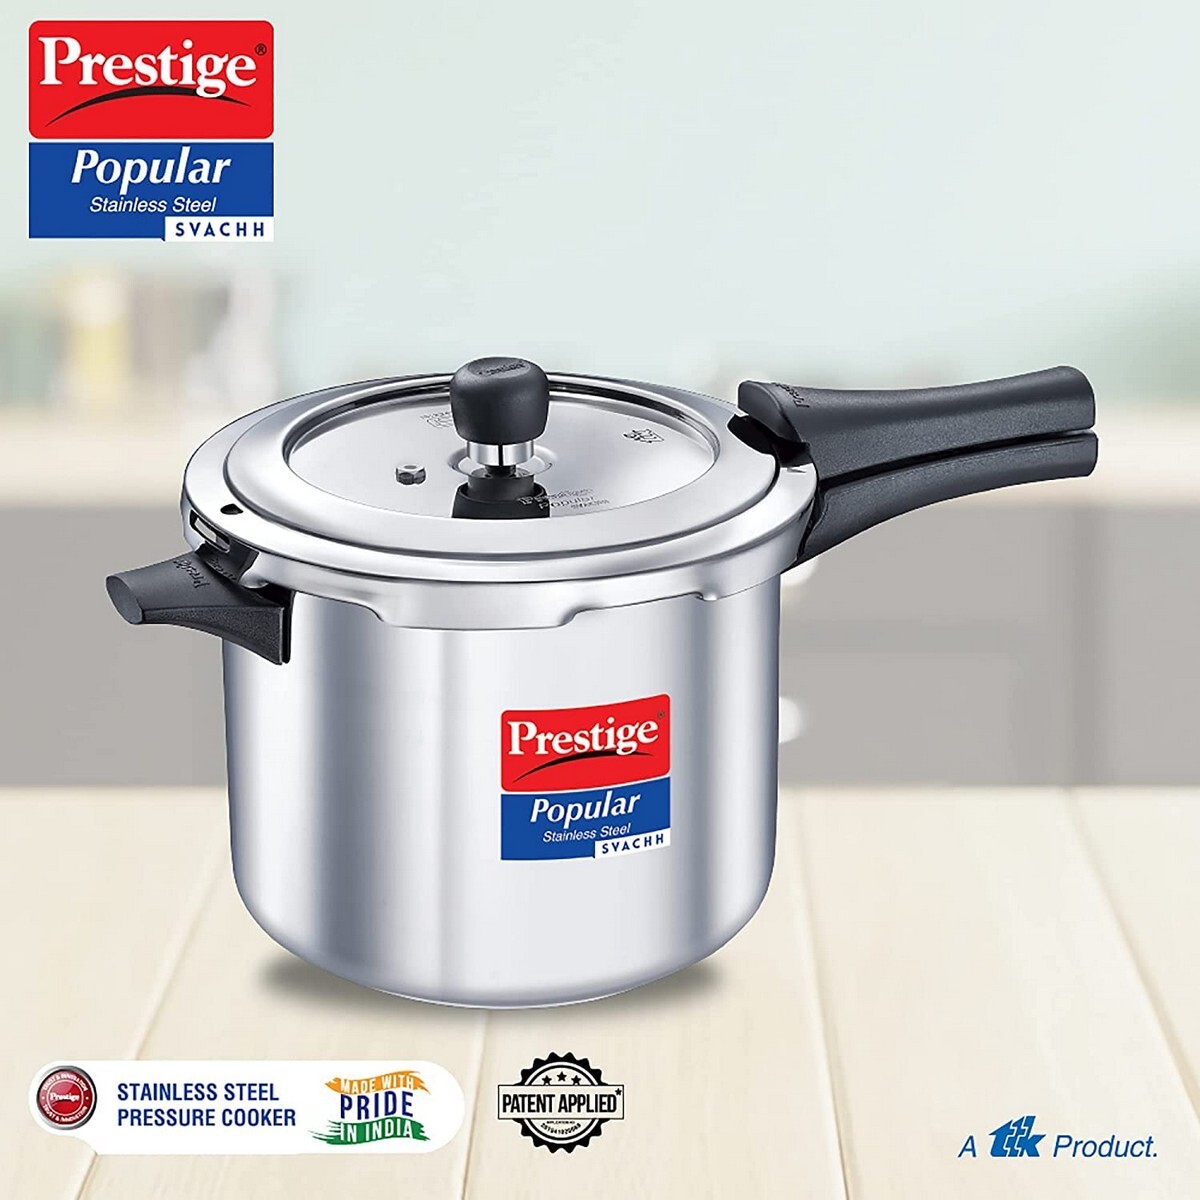 Prestige Popular Svach Stainless Steel Pressure Cookers 2L